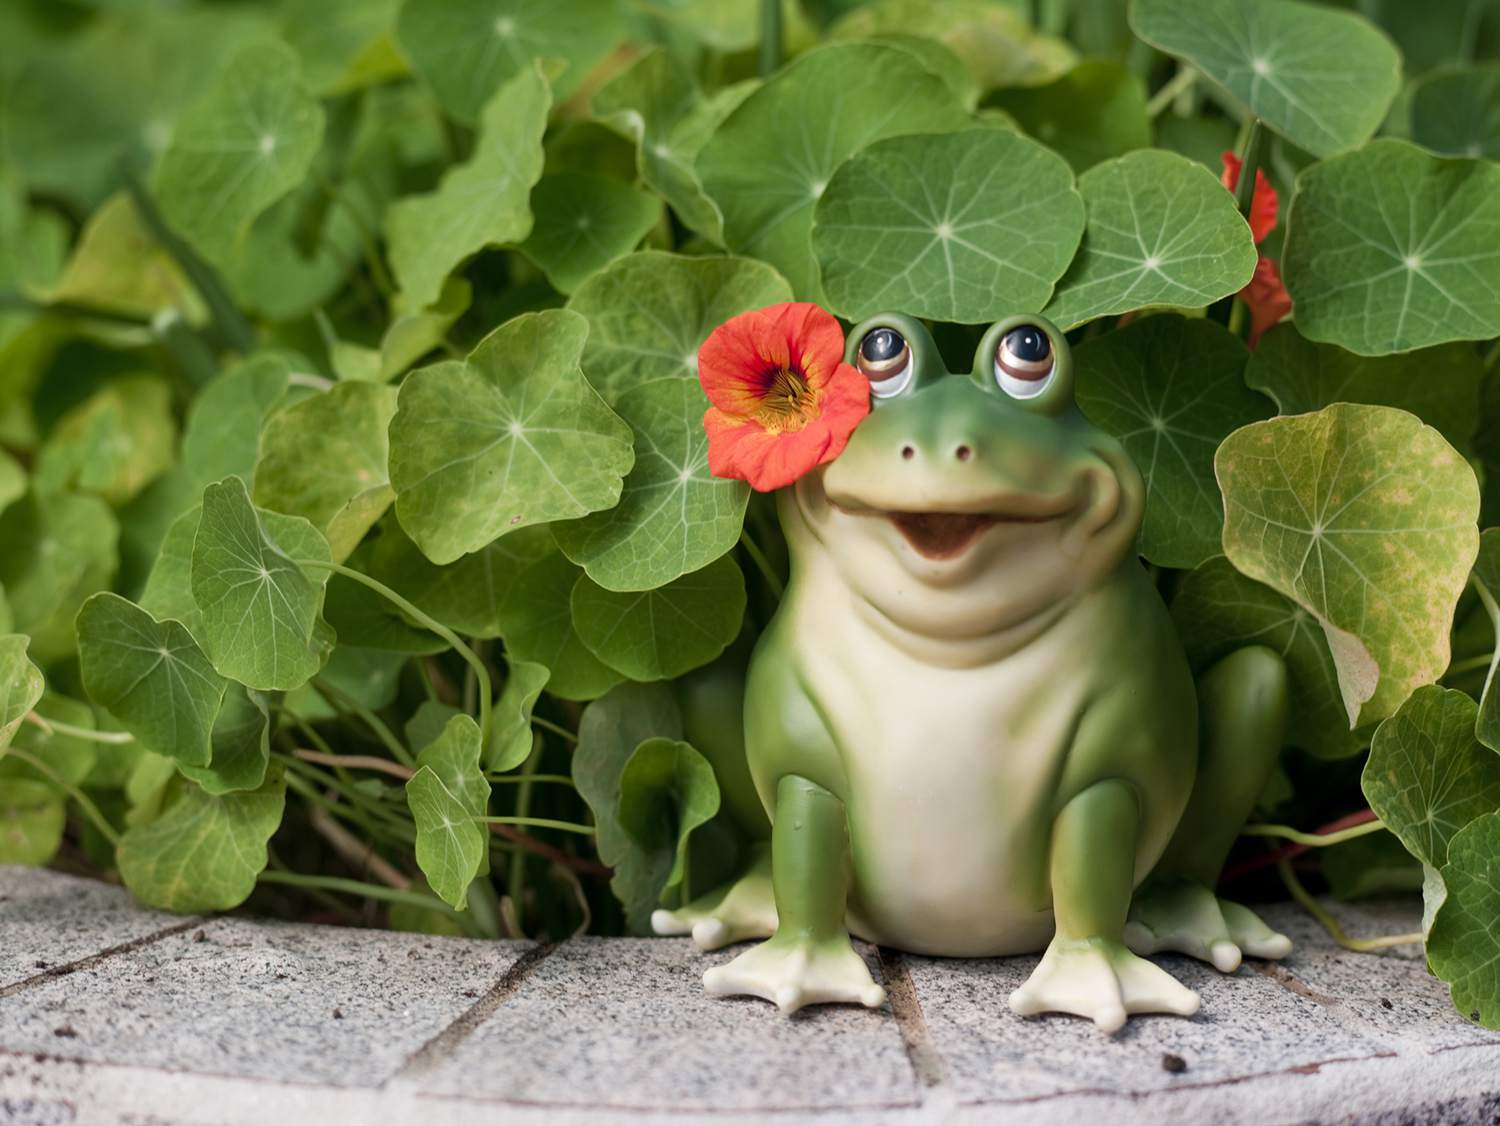 A Toad Figurine